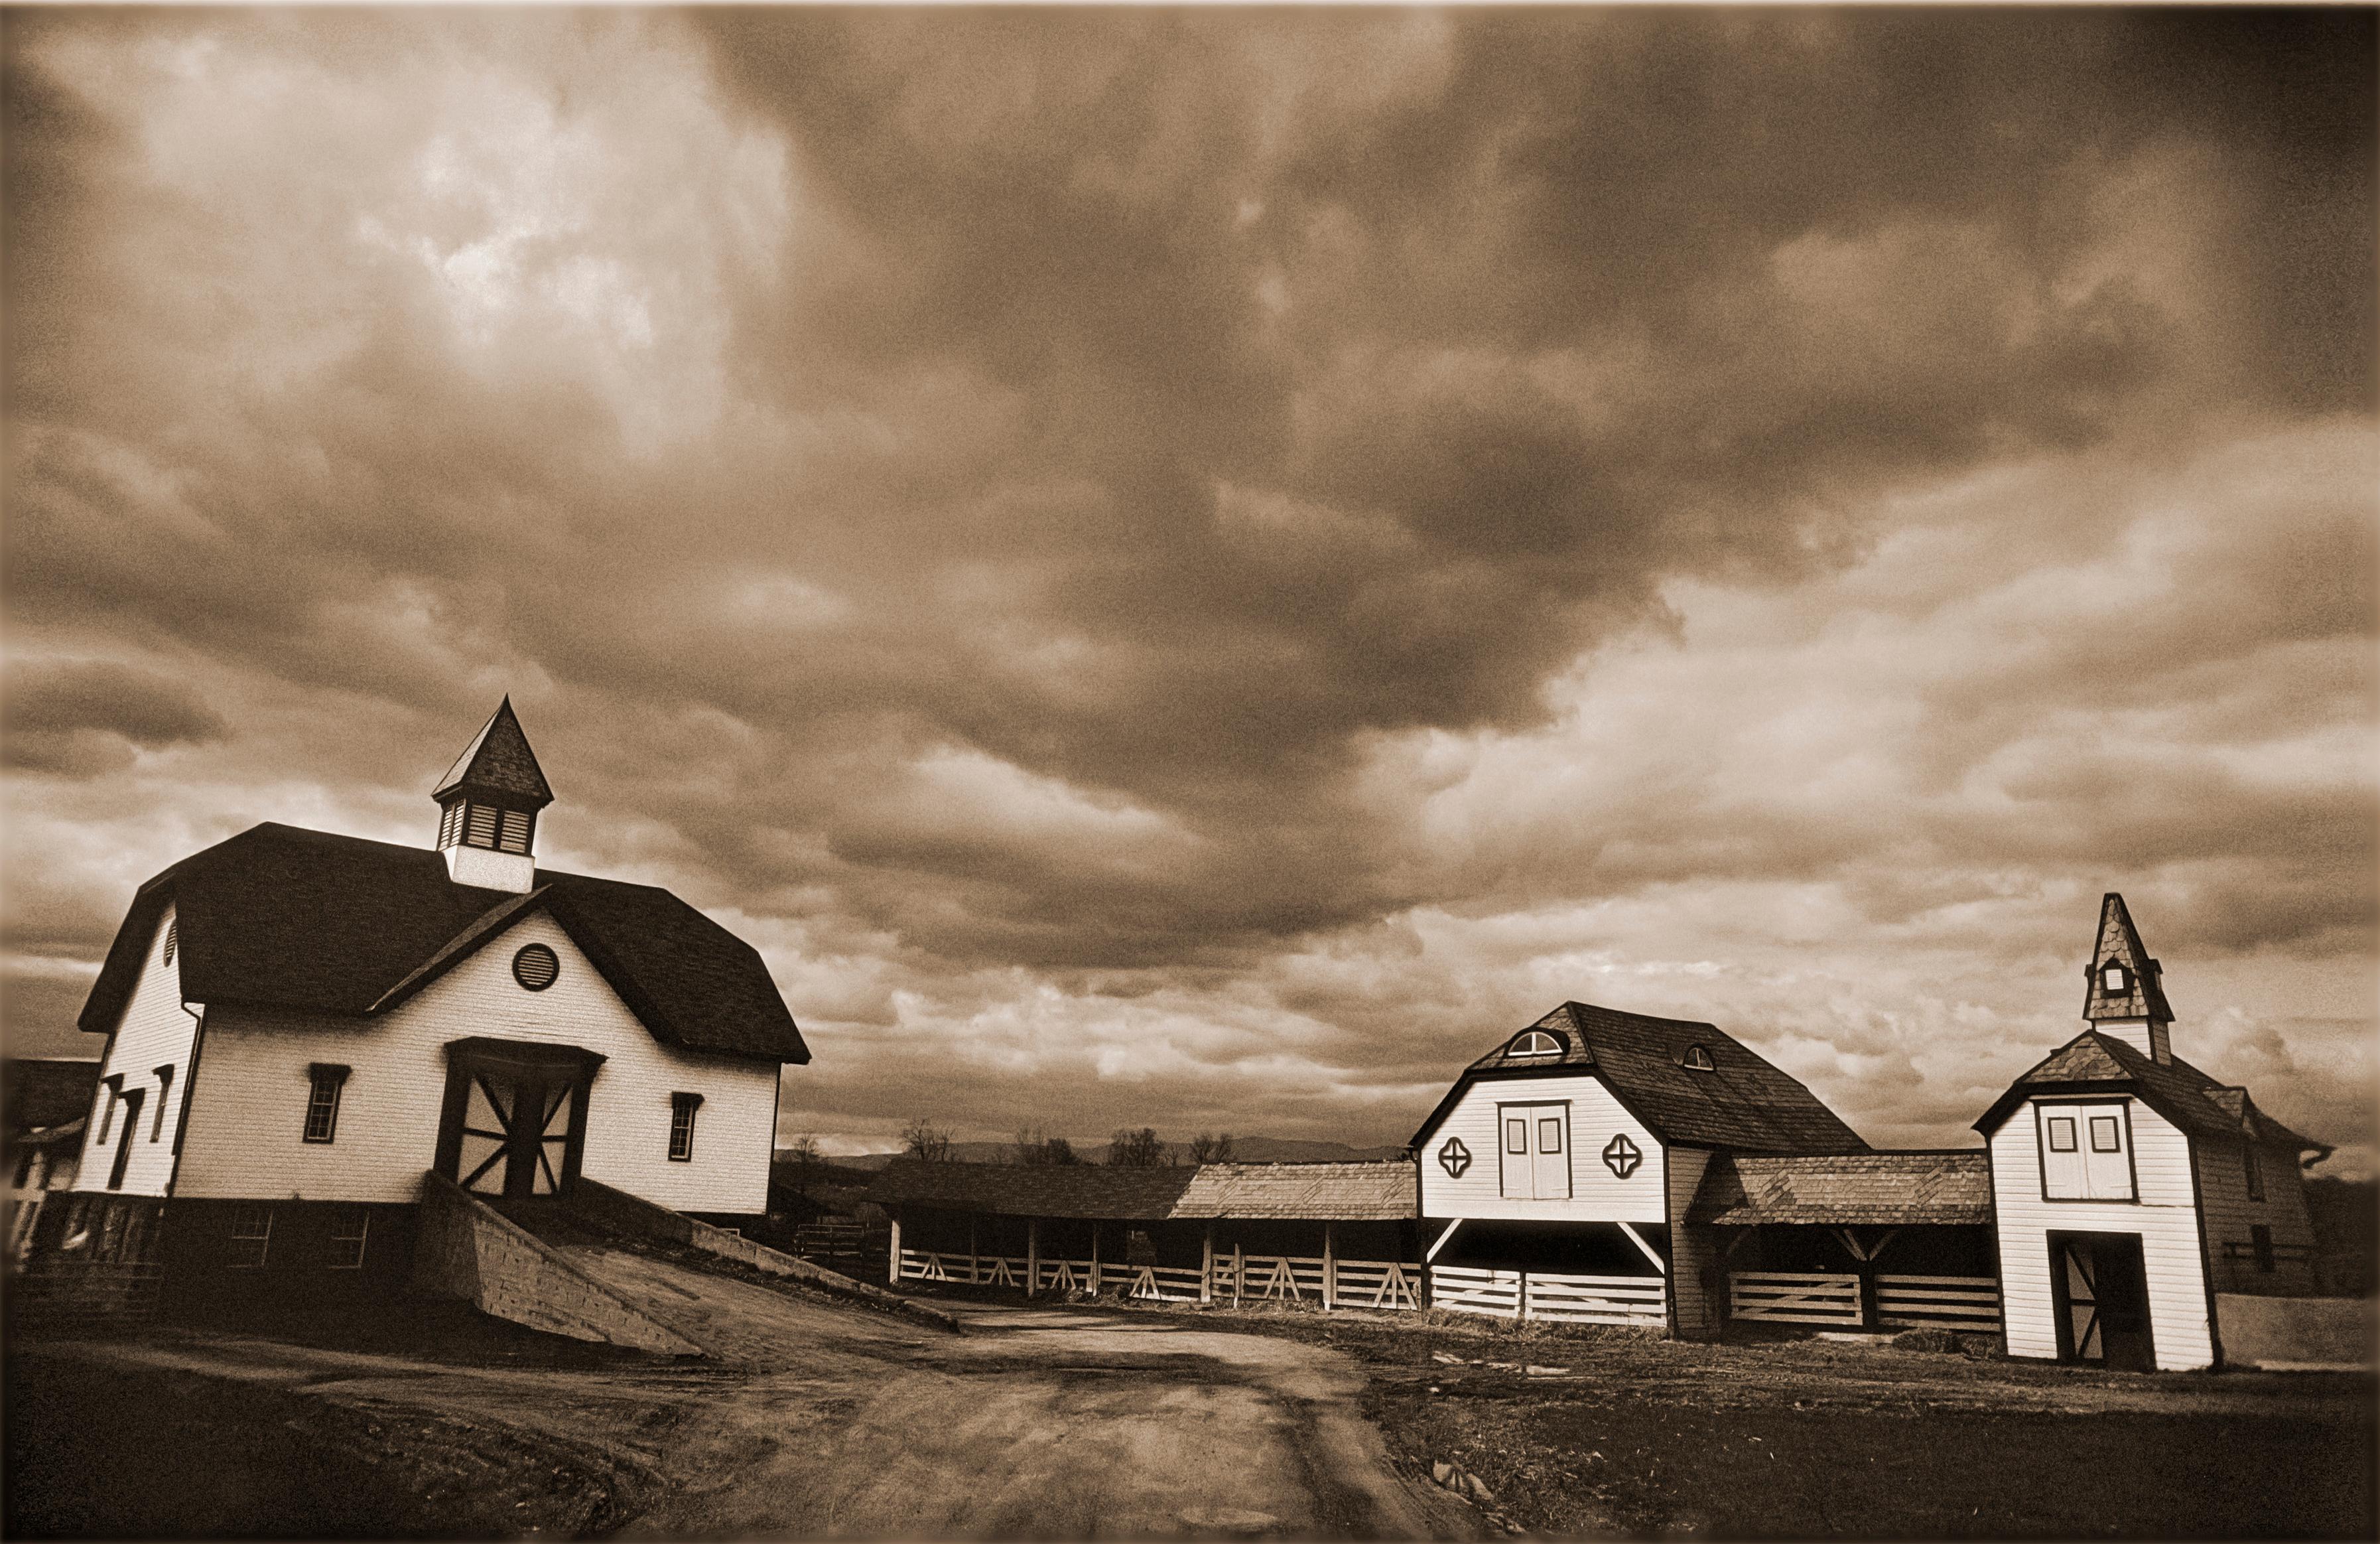 Ankony Farm ( Contemporary Rural Landscape Sepia toned Photograph with Barns)